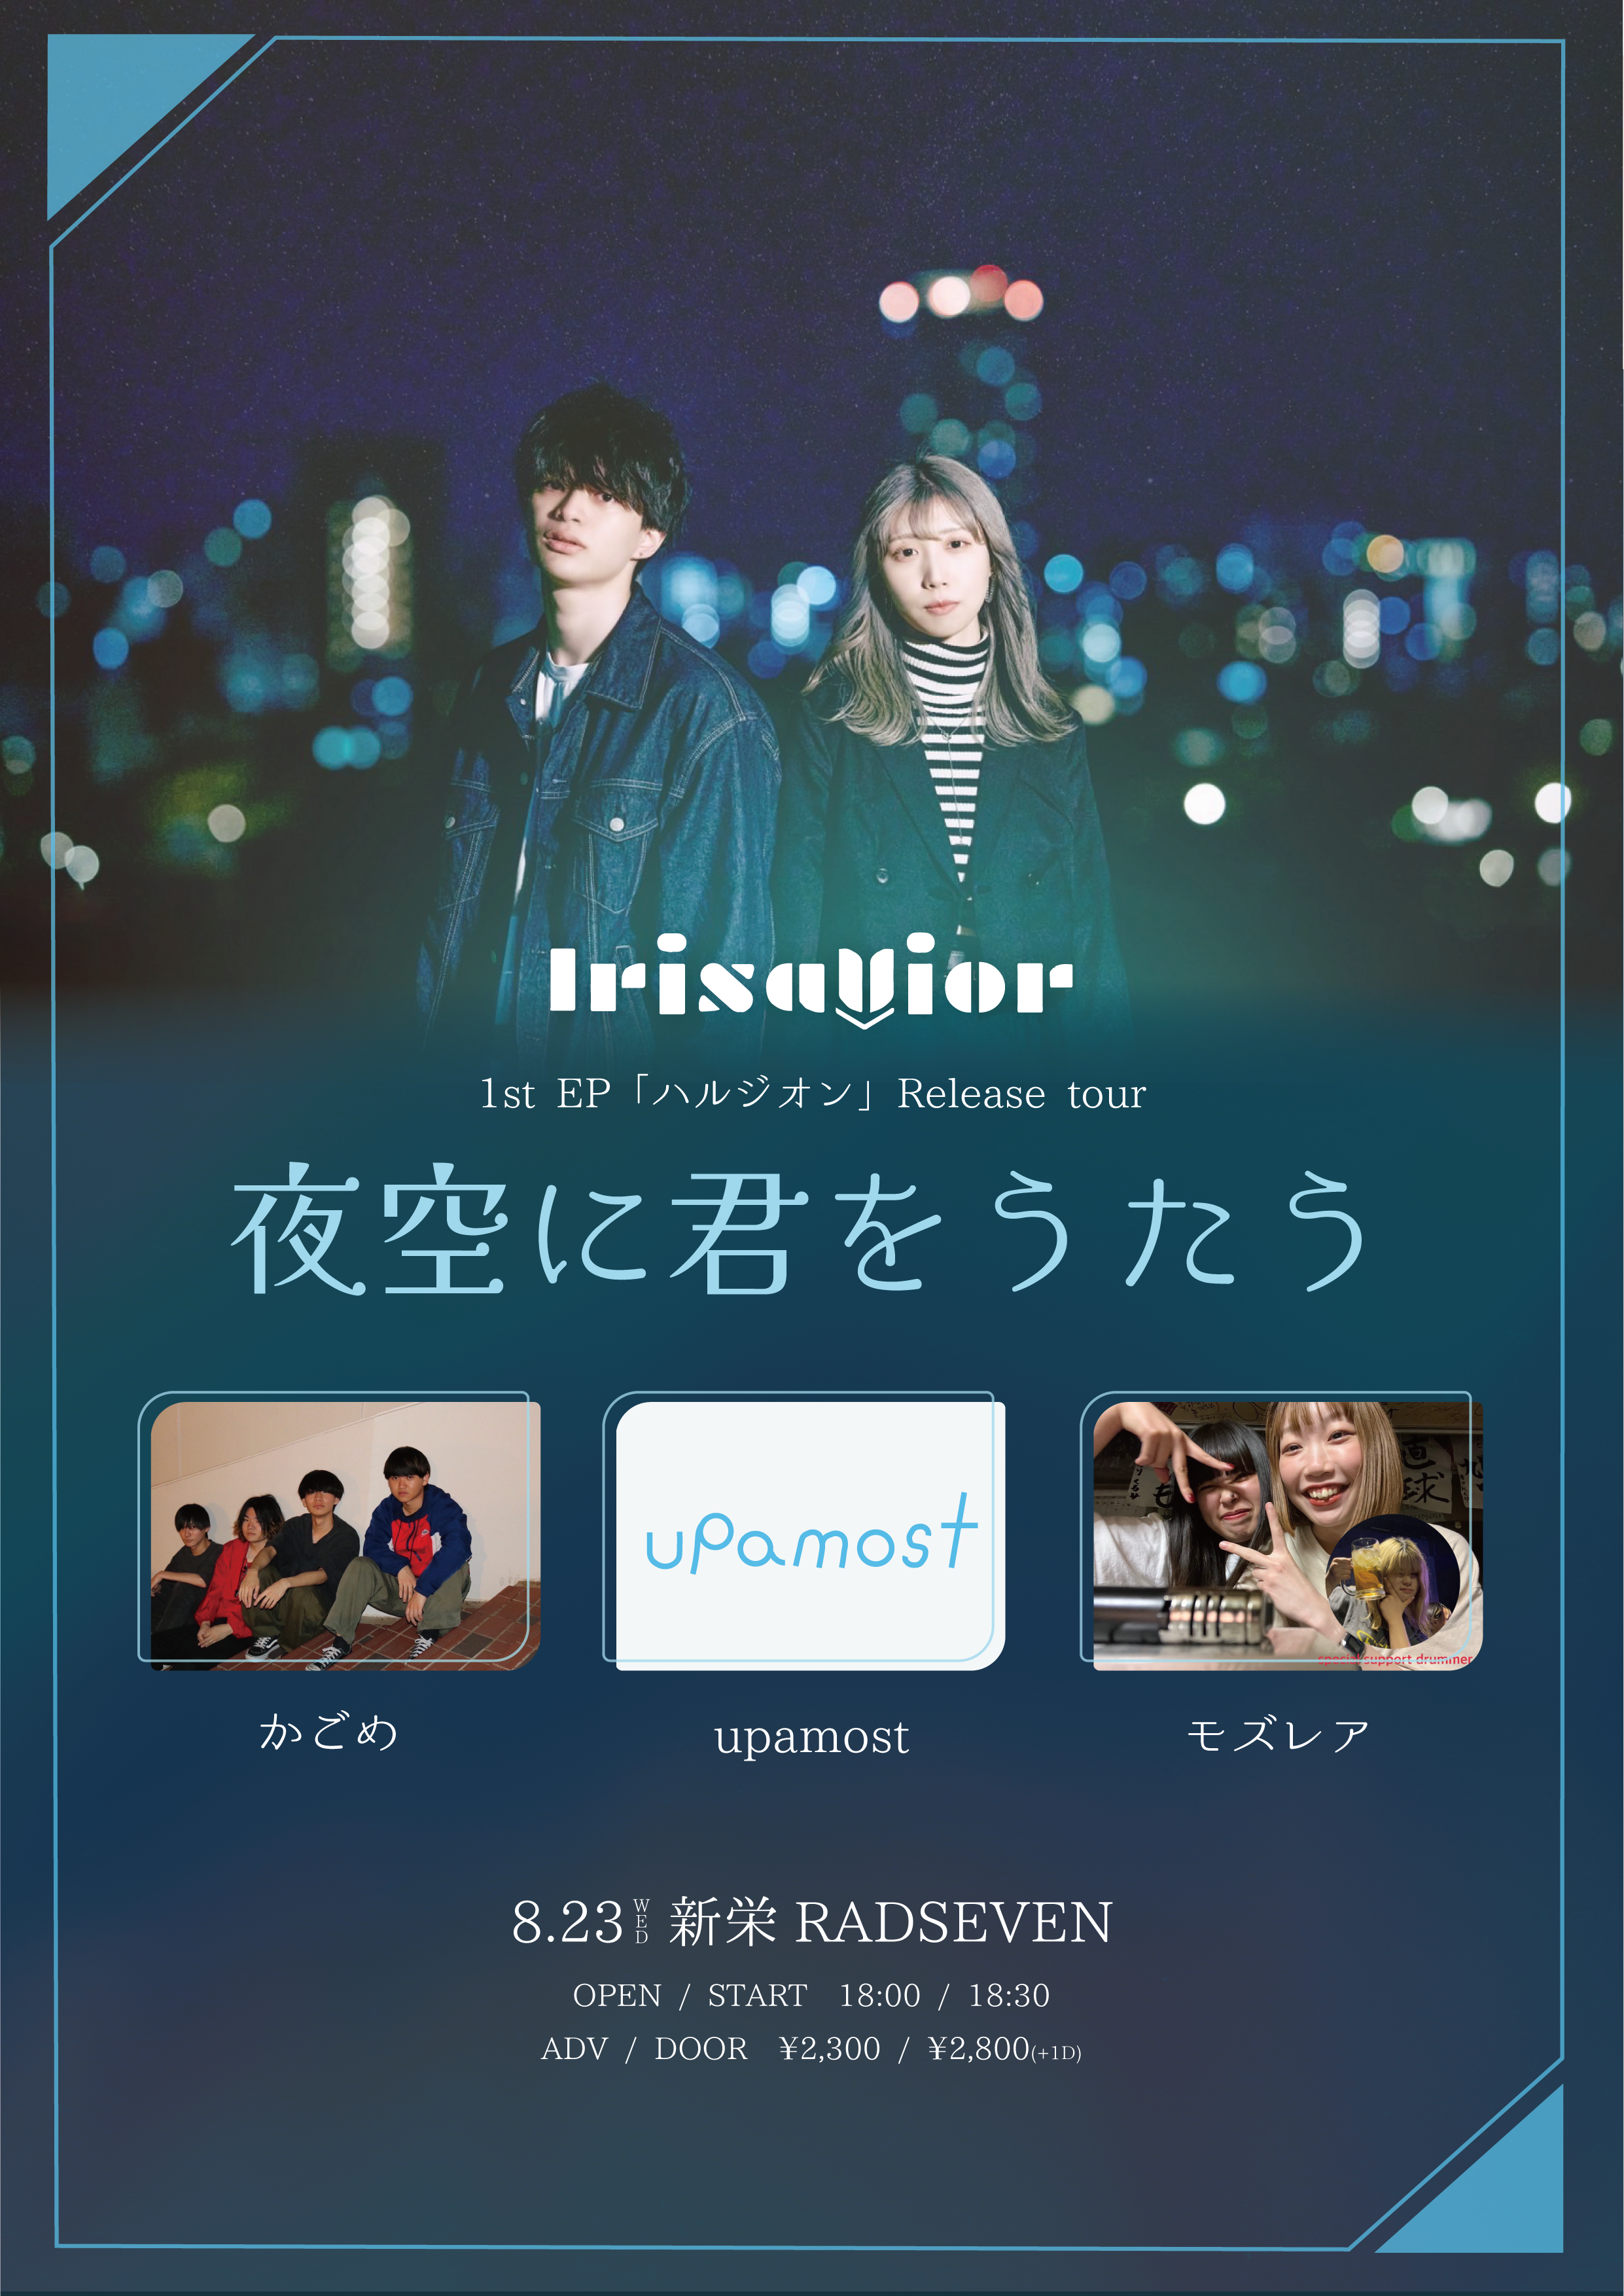 IrisaVior 1st EP「ハルジオン」Release tour "夜空に君をうたう"